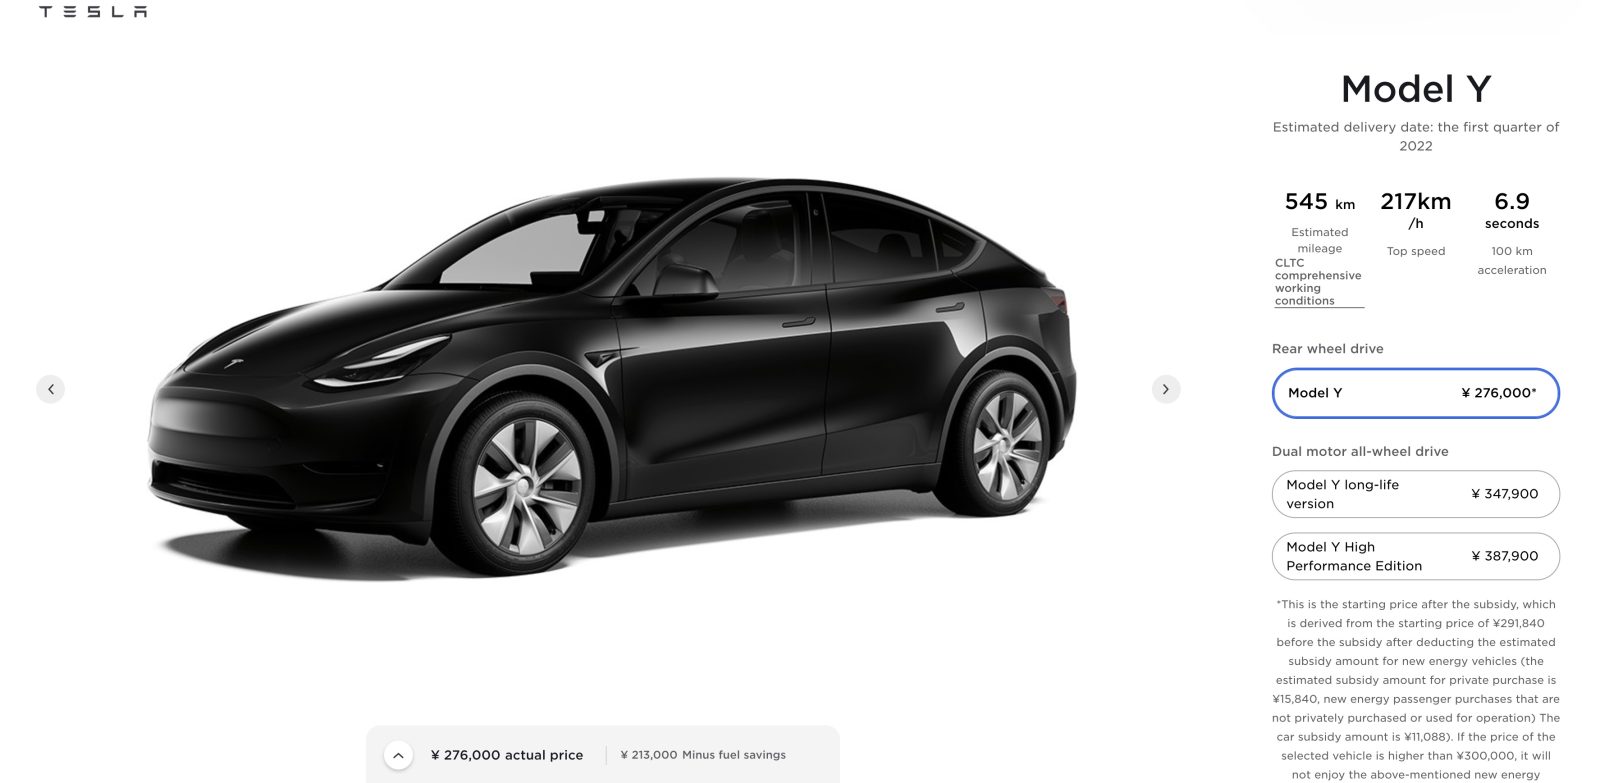 Tesla updates made-in-China Model Y with slightly longer range